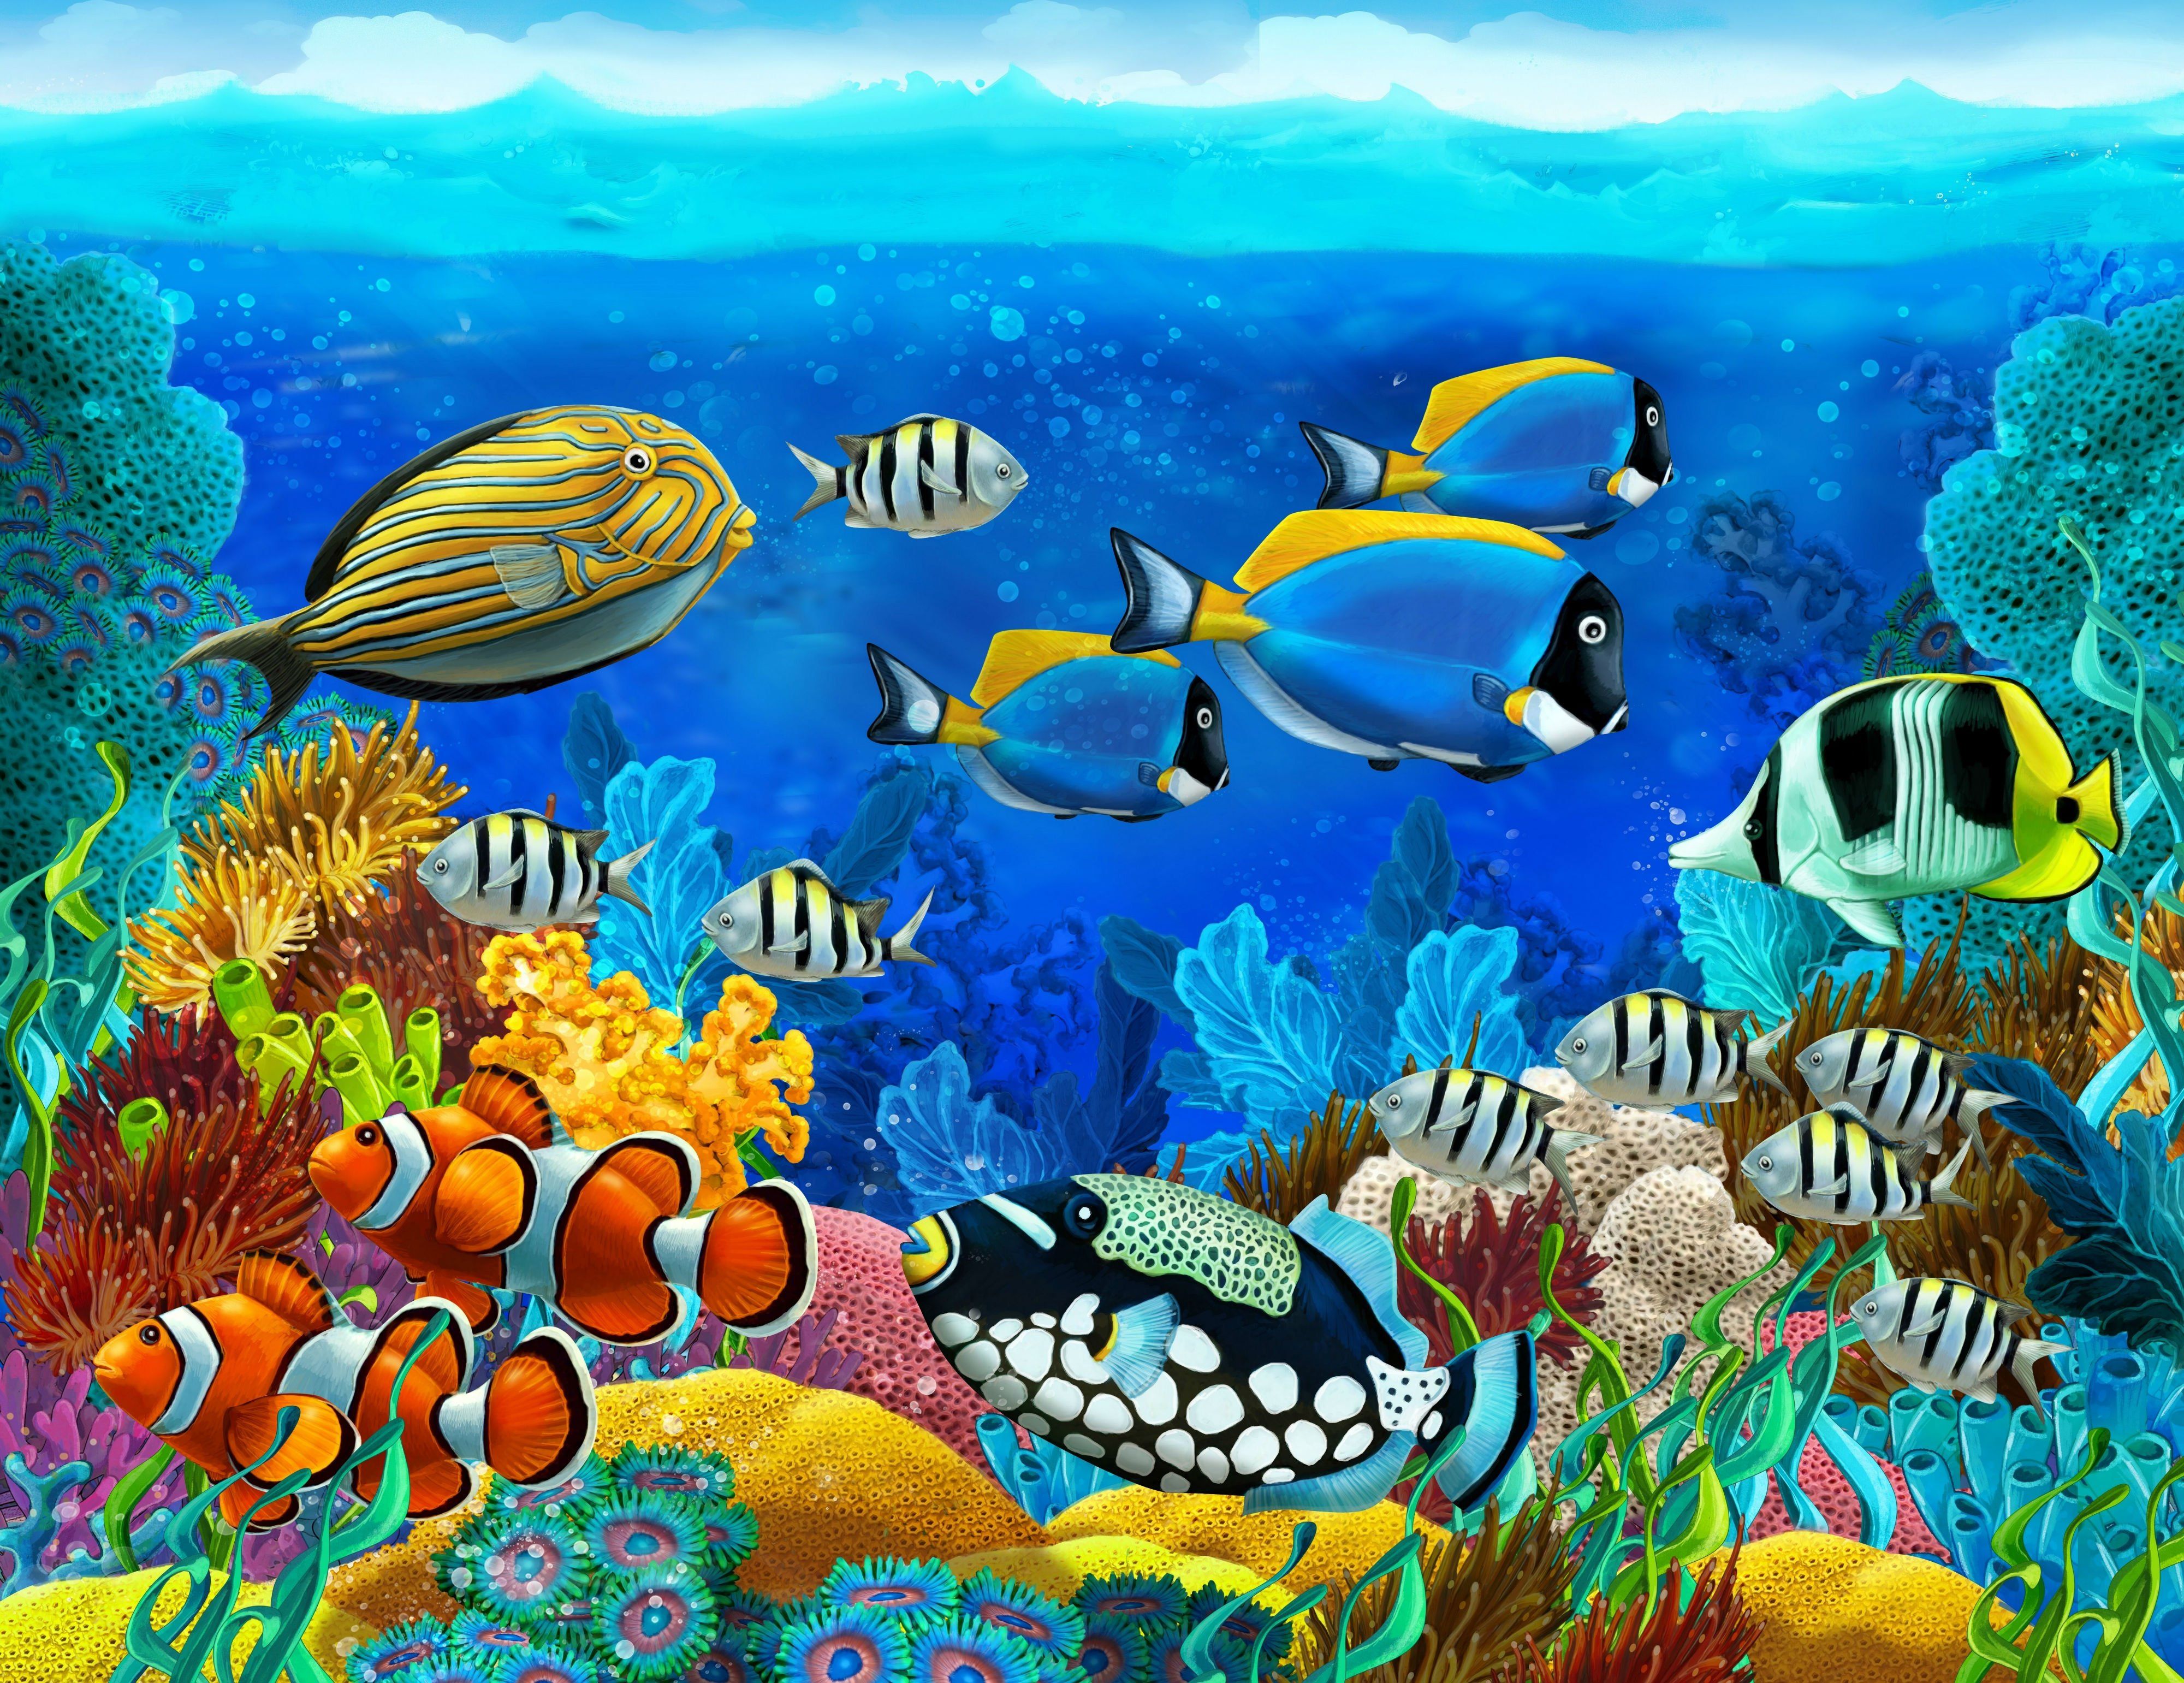 Underwater Fish Wallpaper | wallpapers | Pinterest | Underwater fish ...